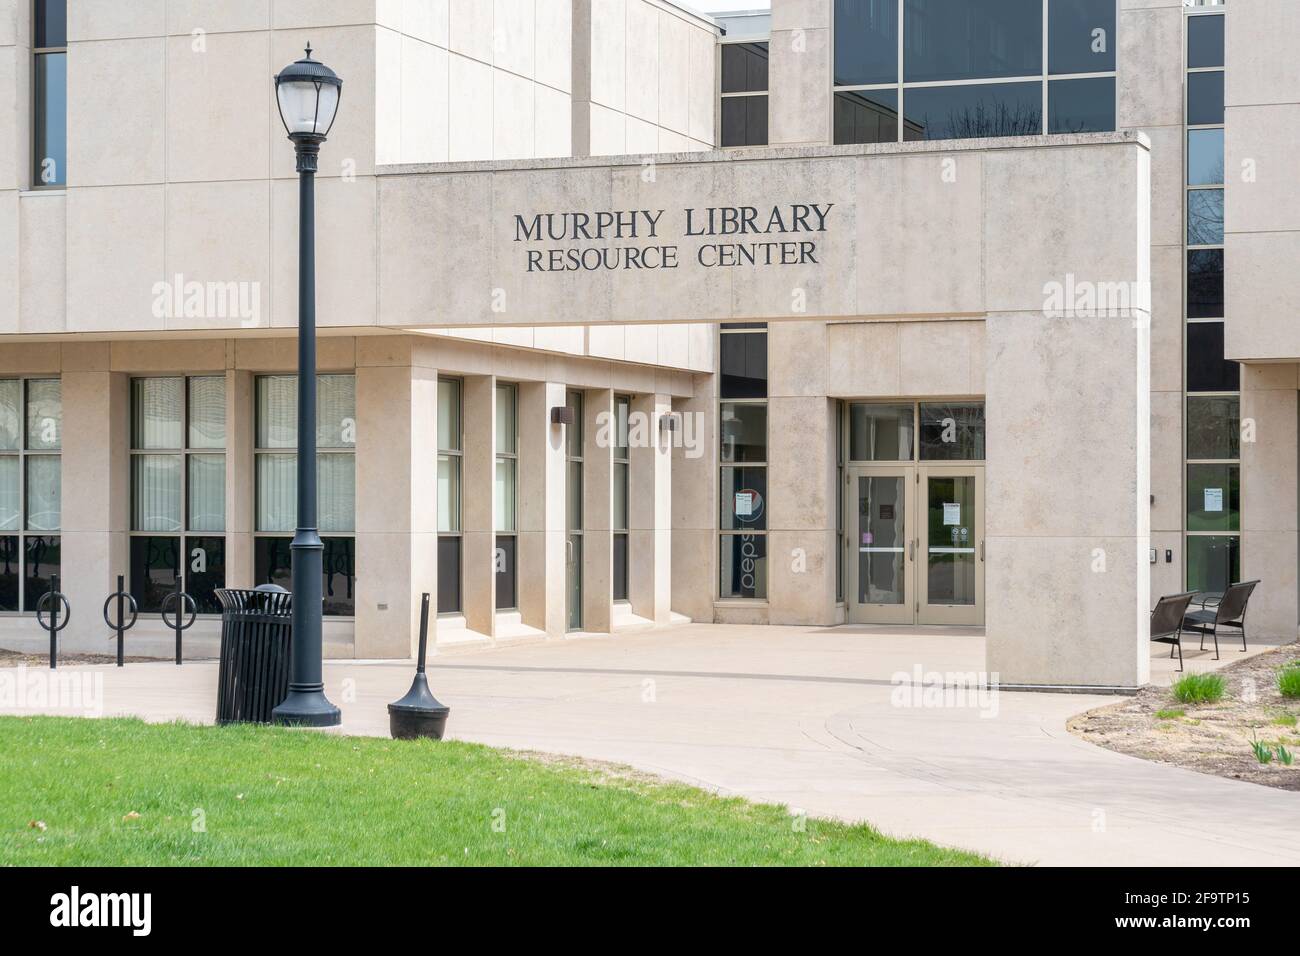 LA CROSSE, WI, USA - 17. APRIL 2021 - Murphy Library Resource Center auf dem Campus der University of Wisconsin-La Crosse. Stockfoto